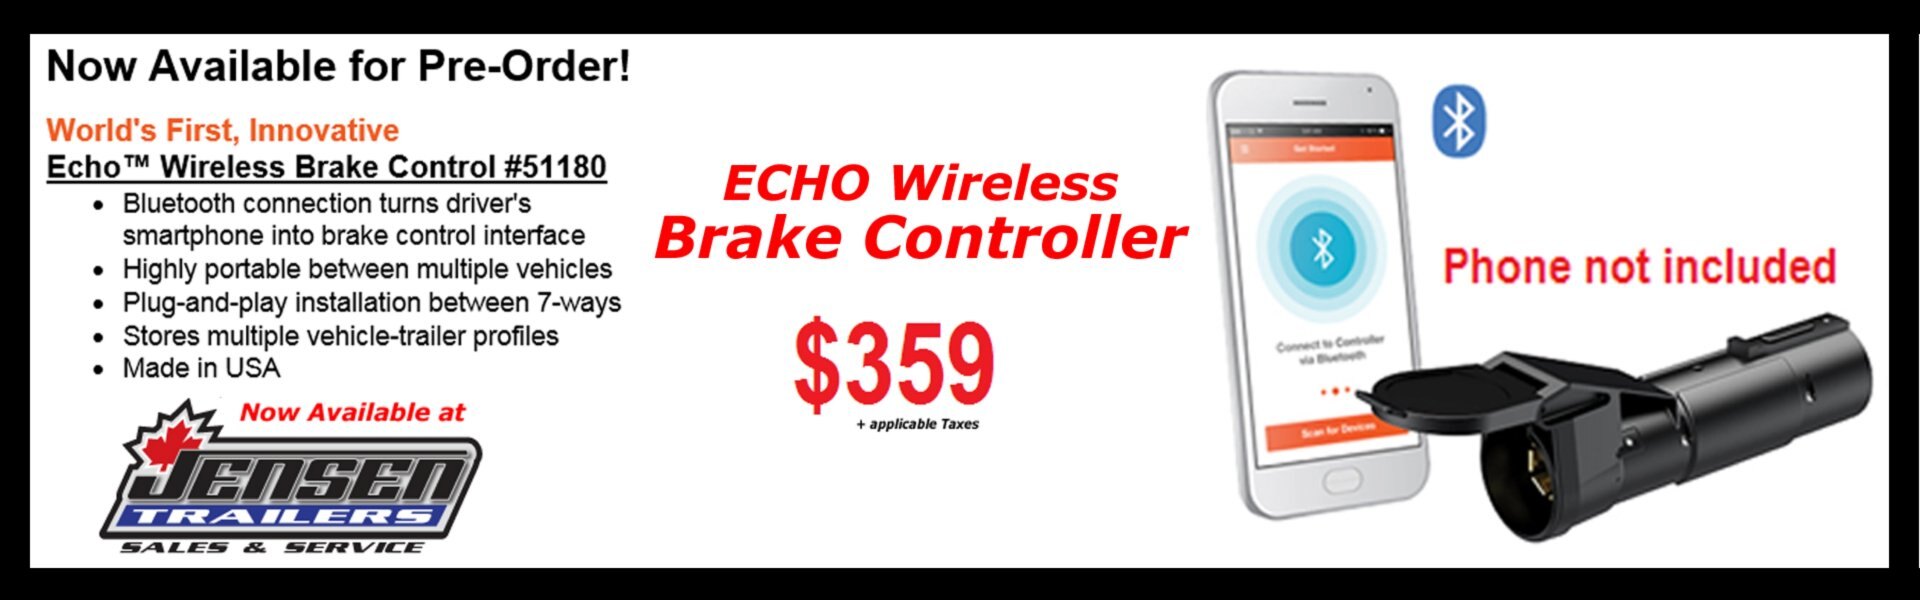 echo Brake Controller_1920x600.jpg